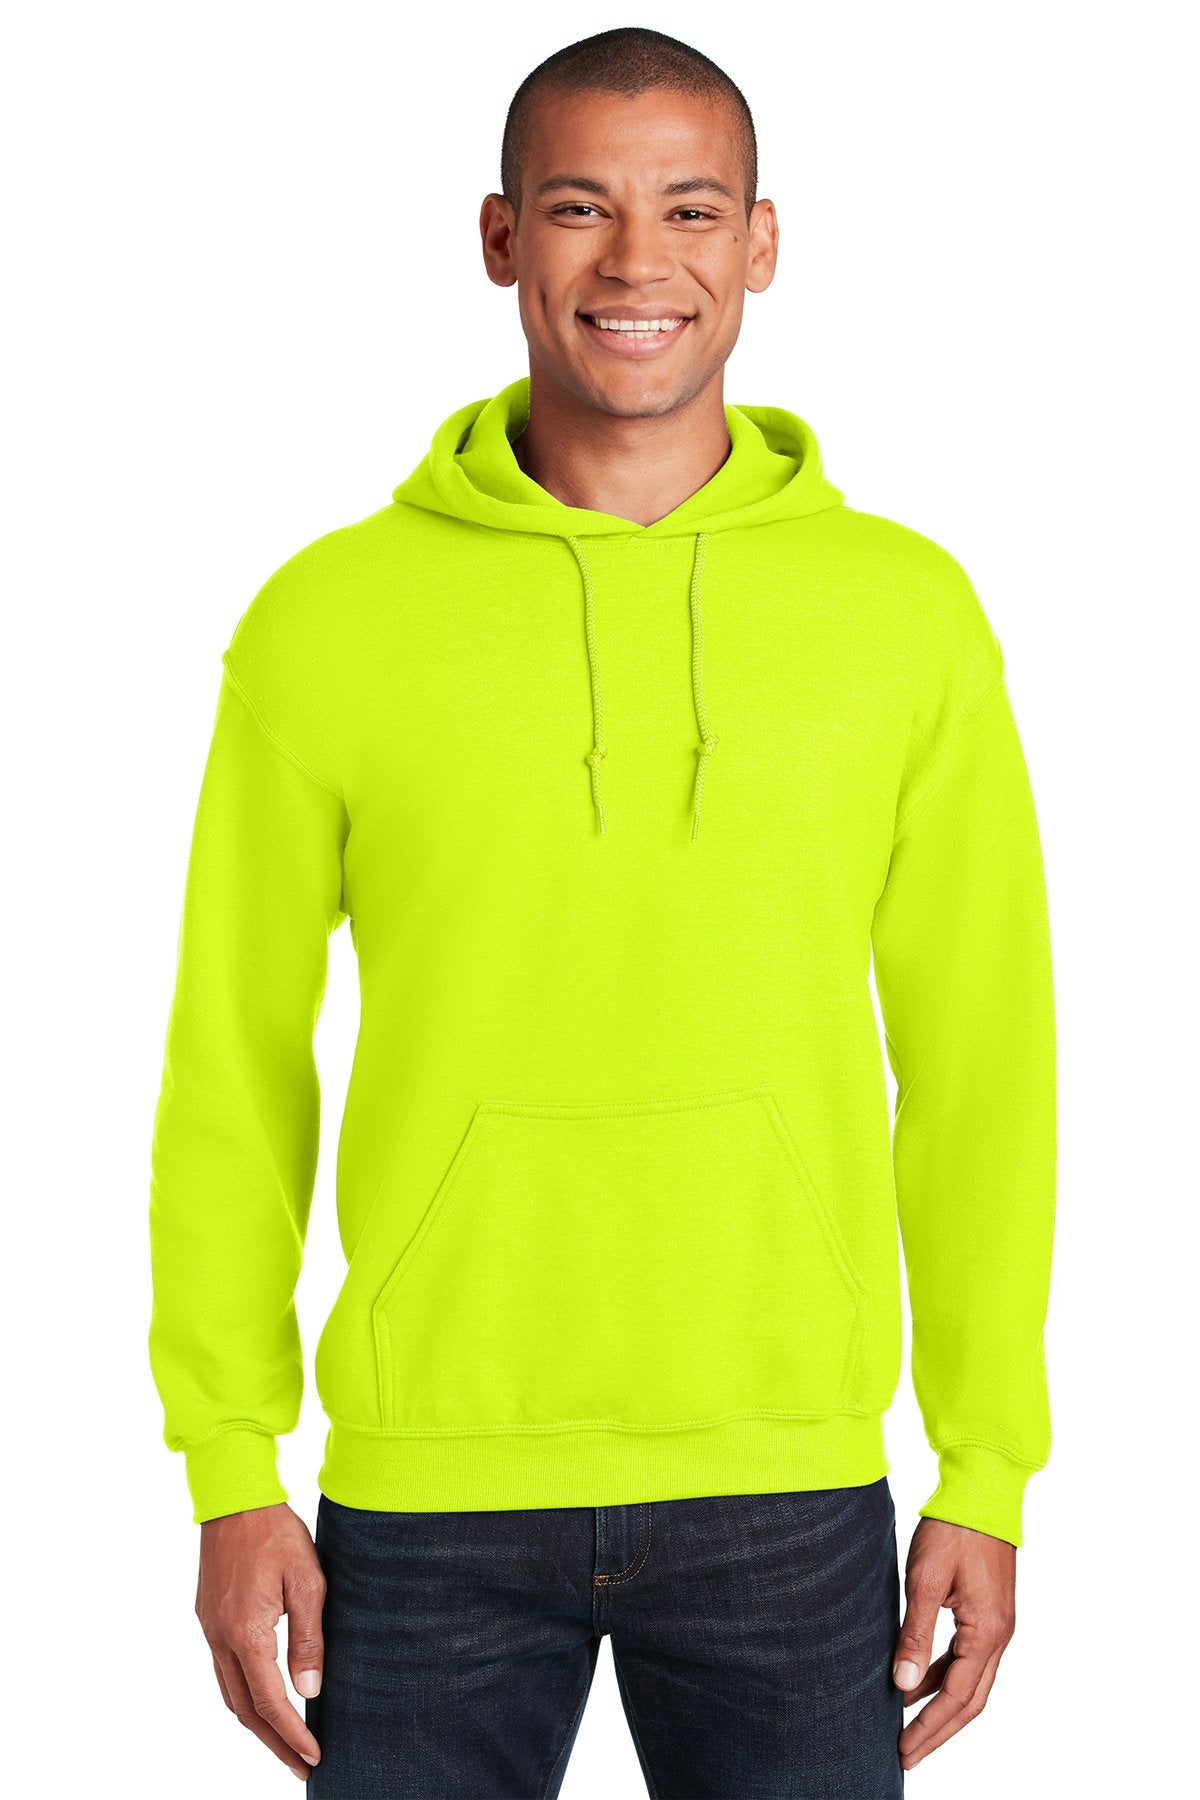 Gildan Heavy Blend Hooded Sweatshirt in Safety Green, with a custom logo